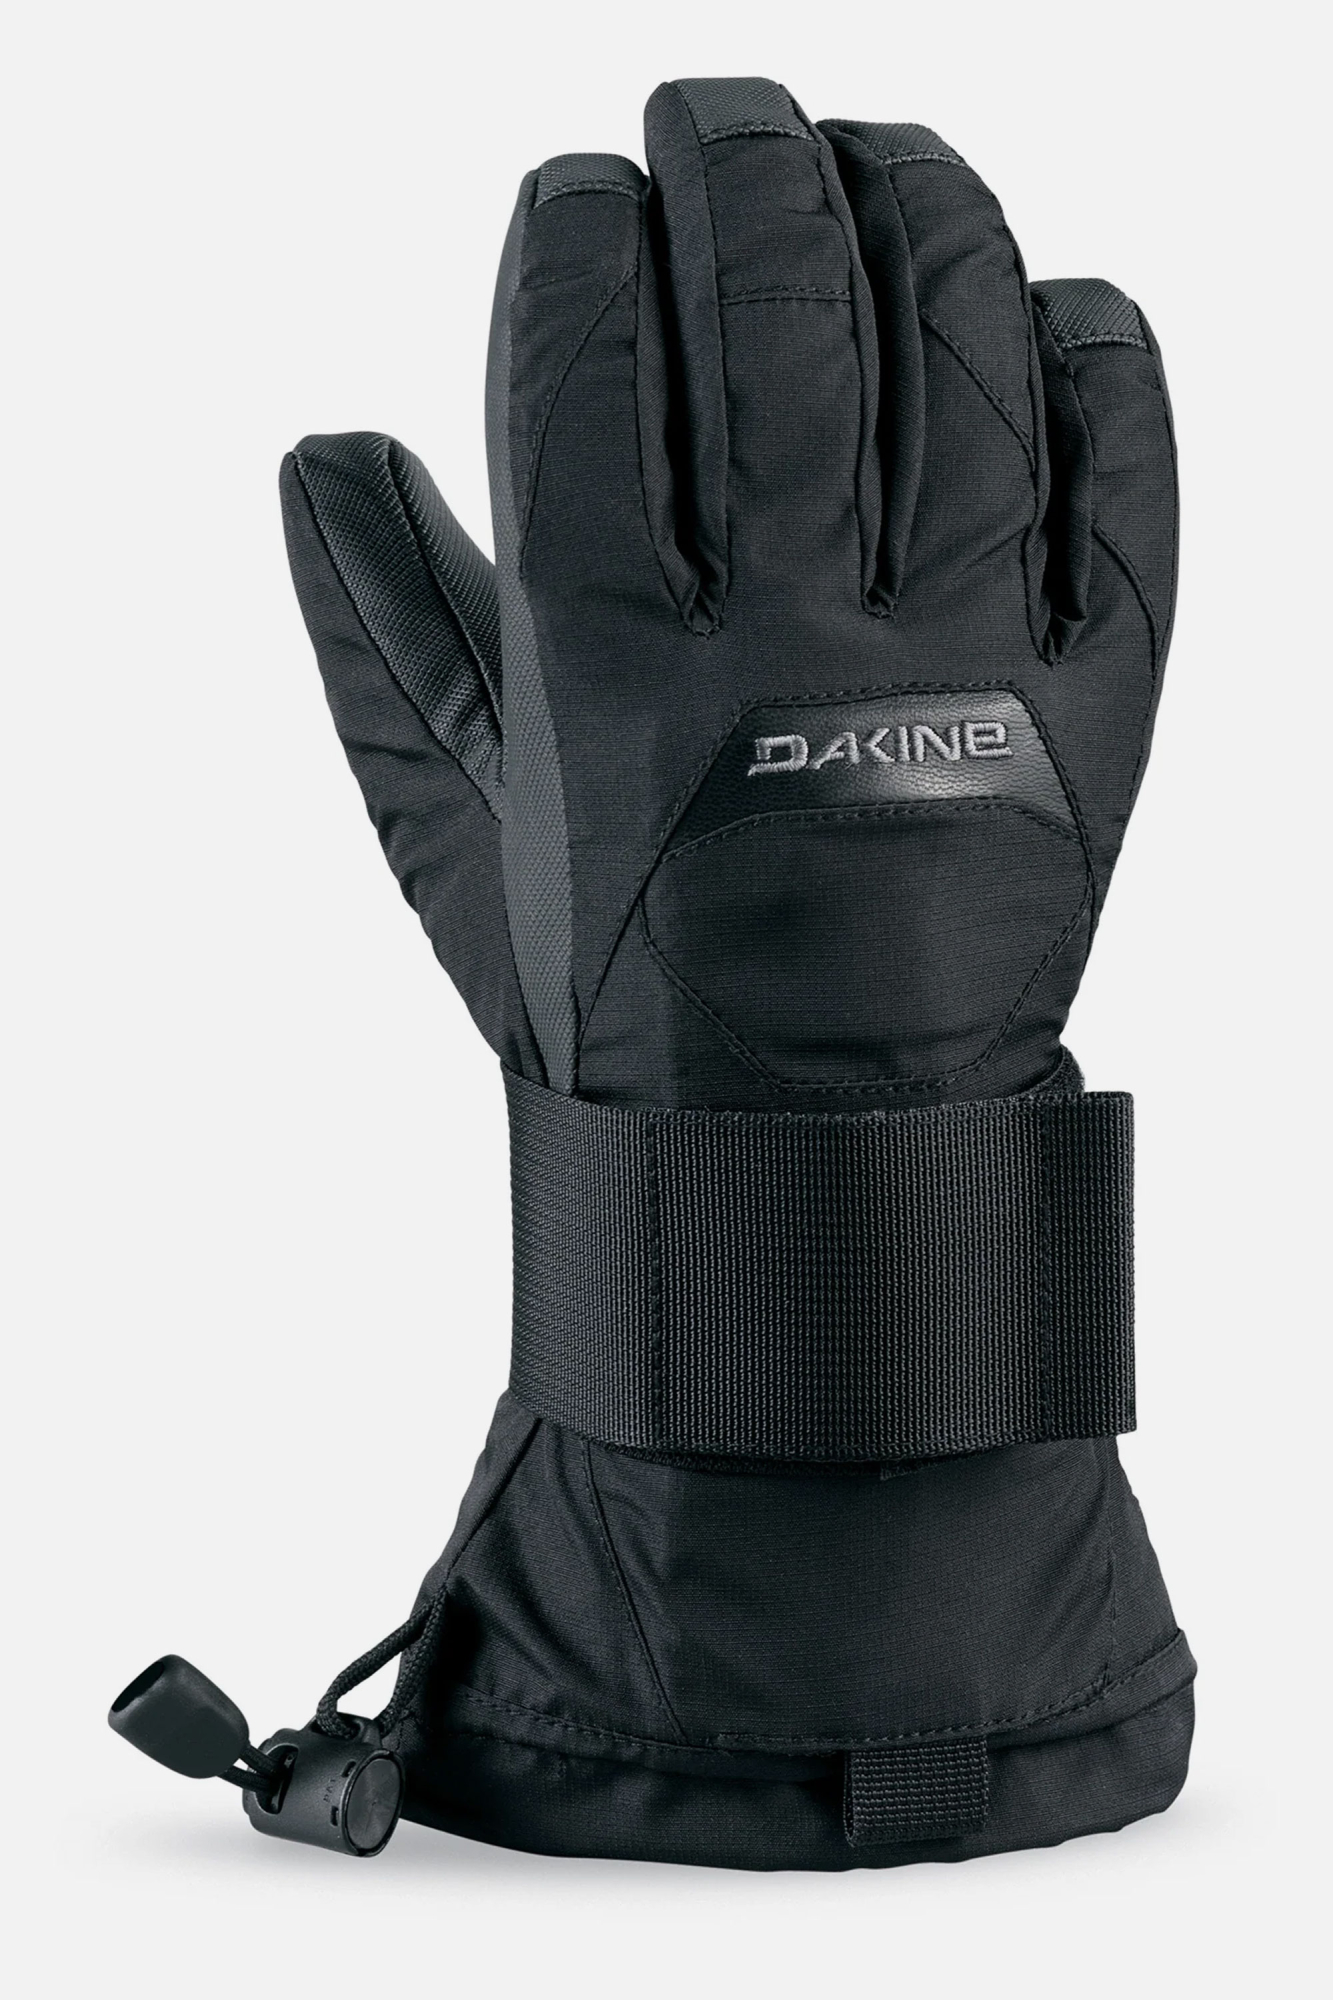 Dakine Mens Wristguard Glove Black - Size: XS